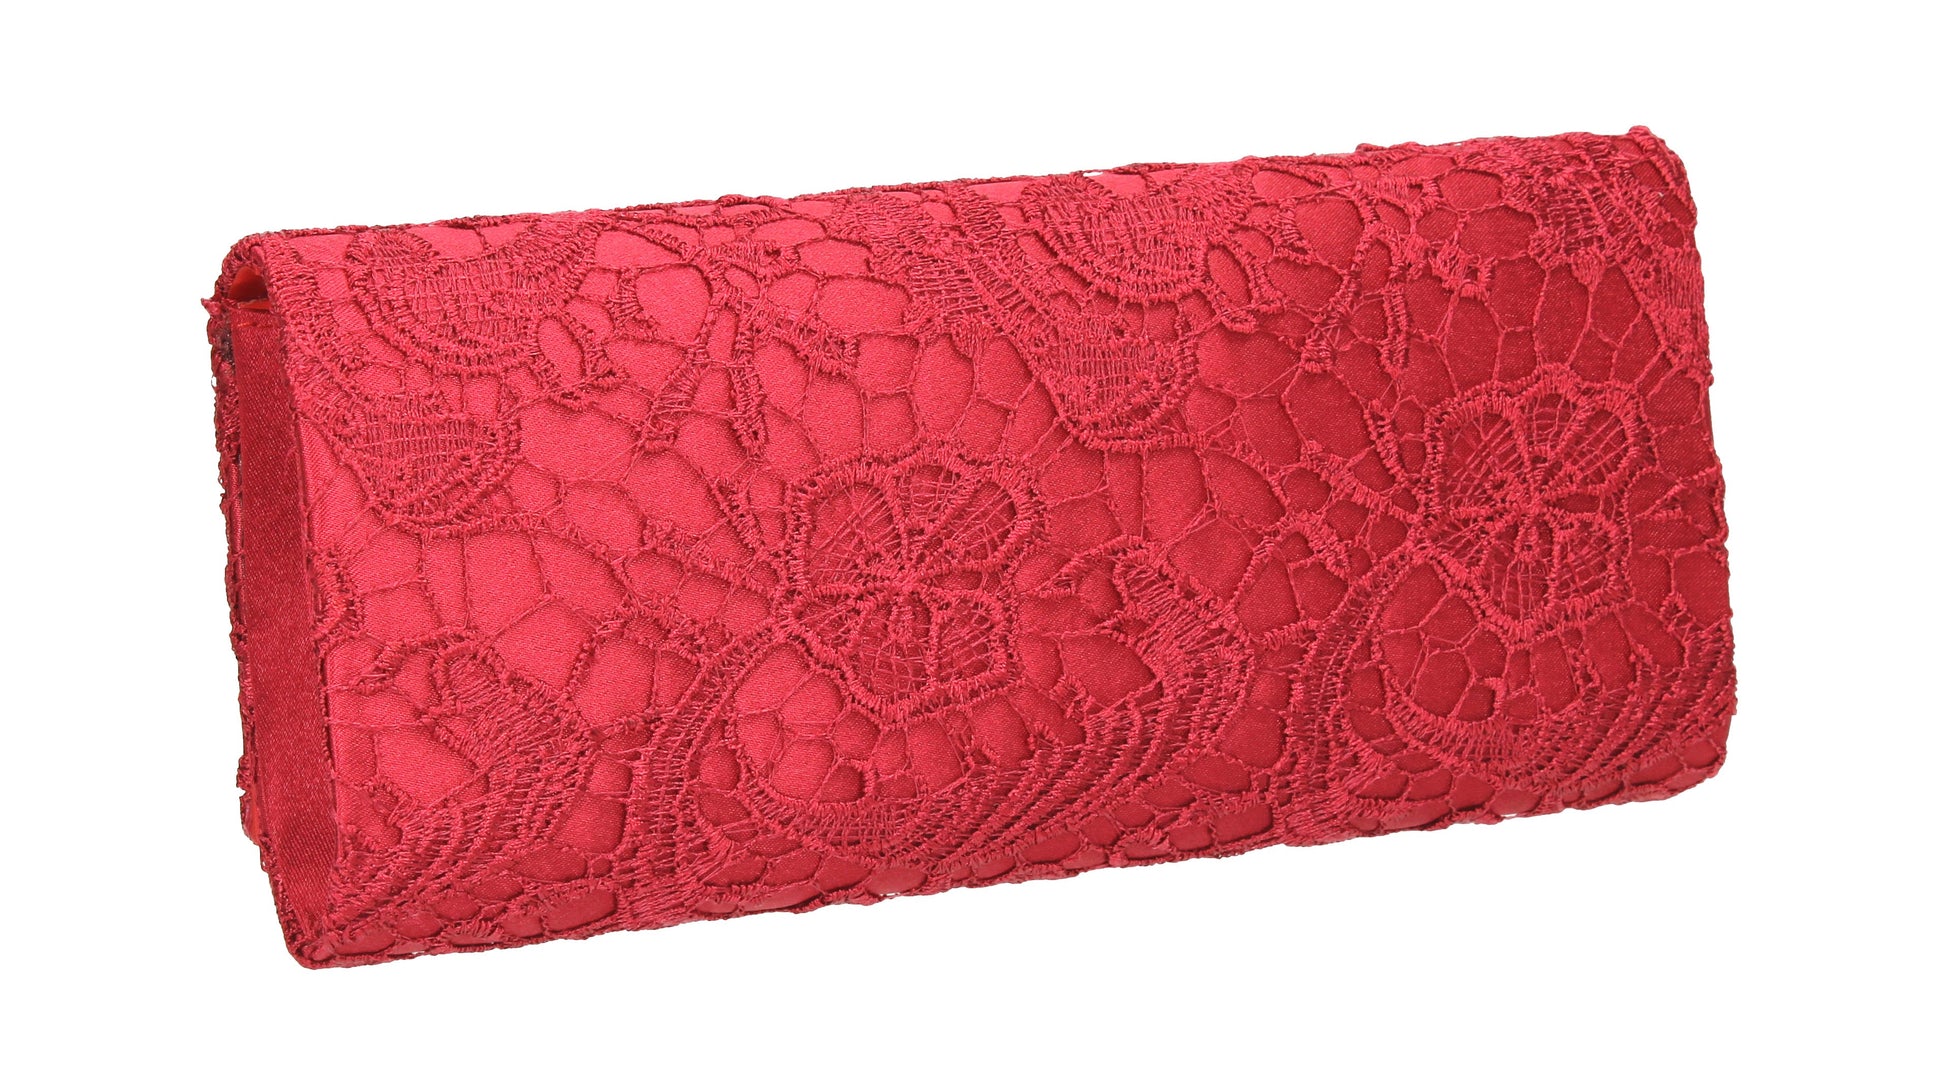 SWANKYSWANS Rachel Lace Clutch Bag Red Cute Cheap Clutch Bag For Weddings School and Work